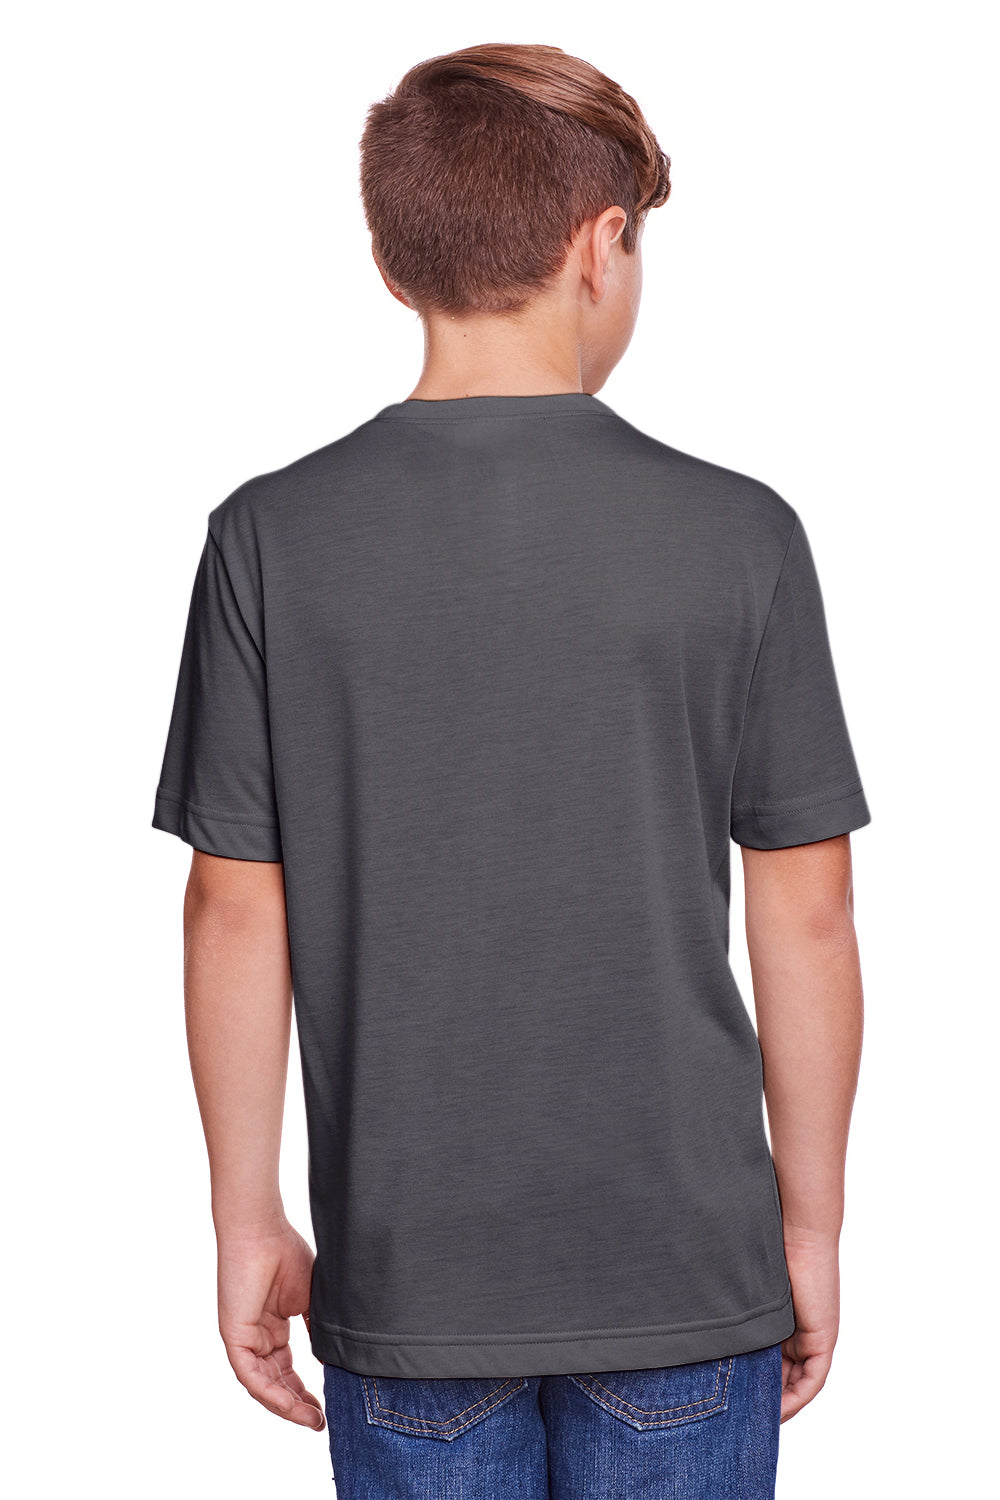 Core 365 CE111Y Youth Fusion ChromaSoft Performance Moisture Wicking Short Sleeve Crewneck T-Shirt Carbon Grey Back